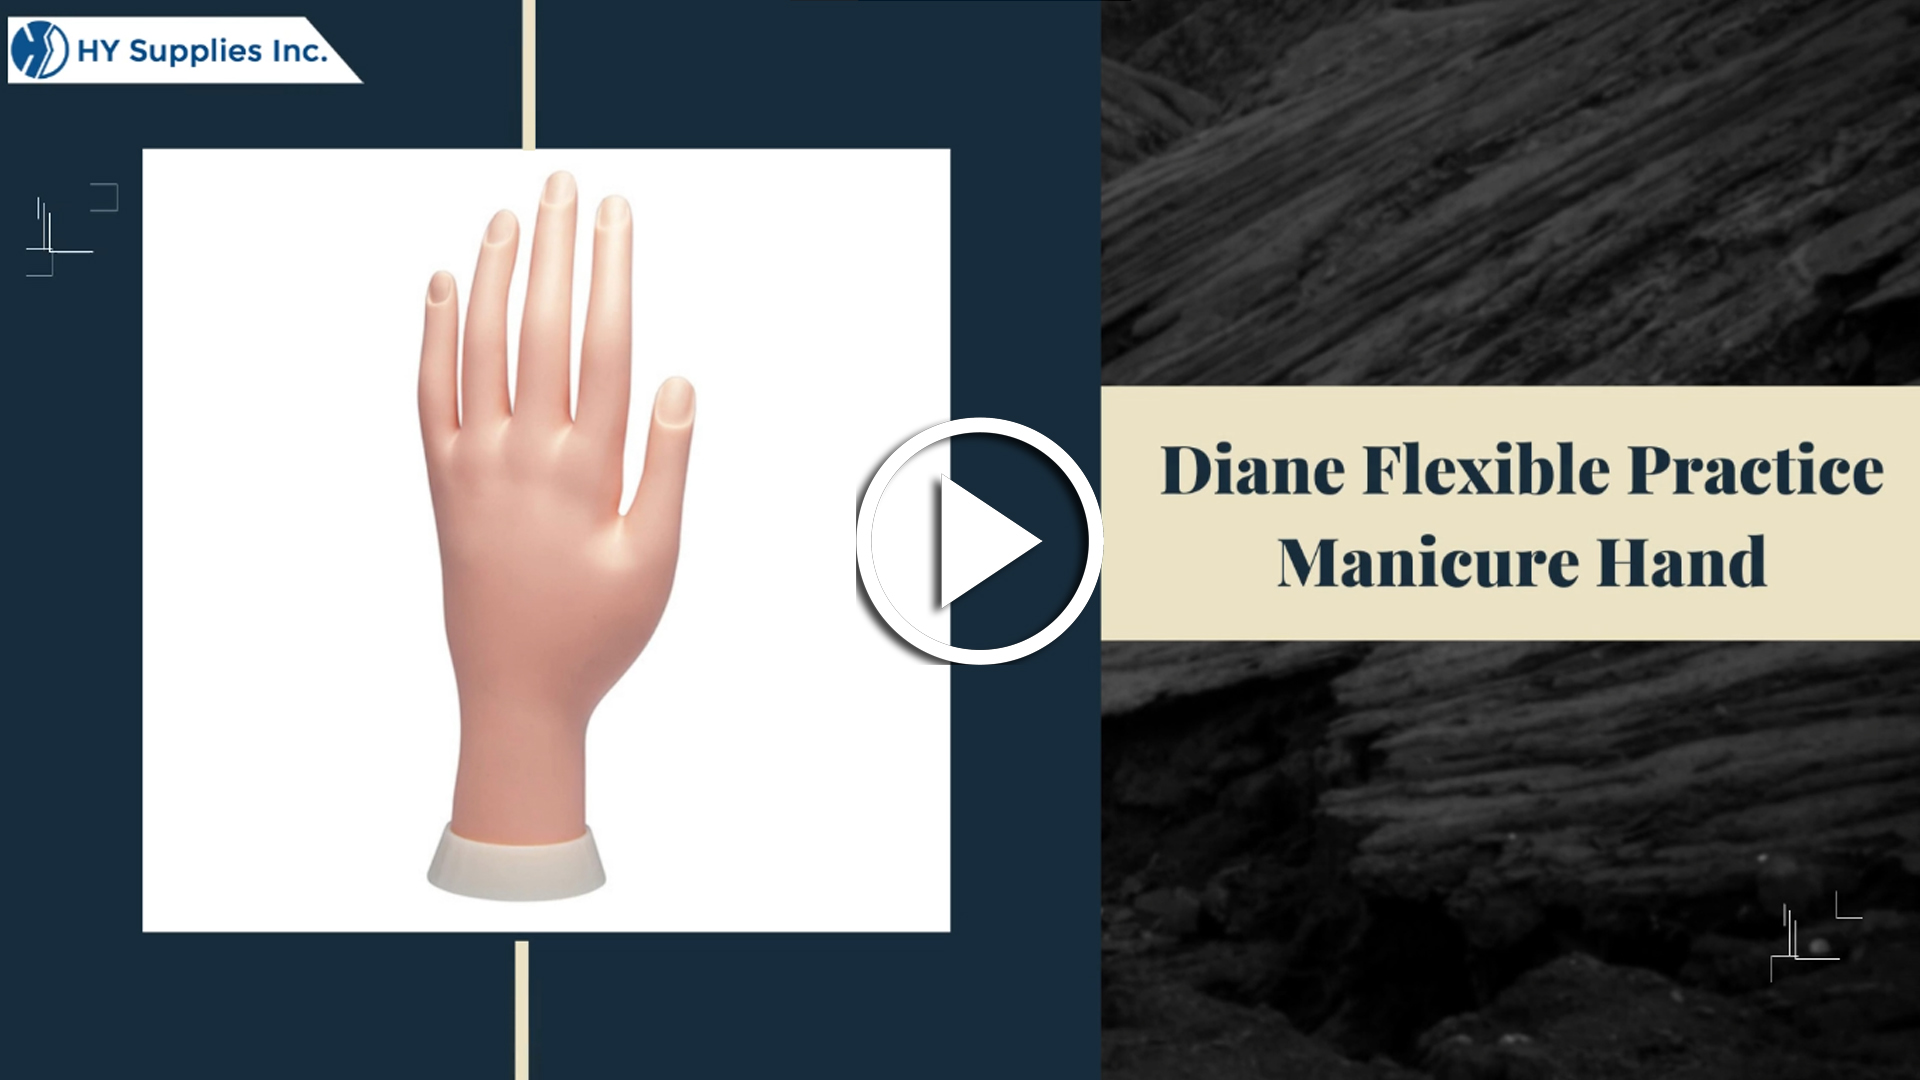 Diane Flexible Practice Manicure Hand